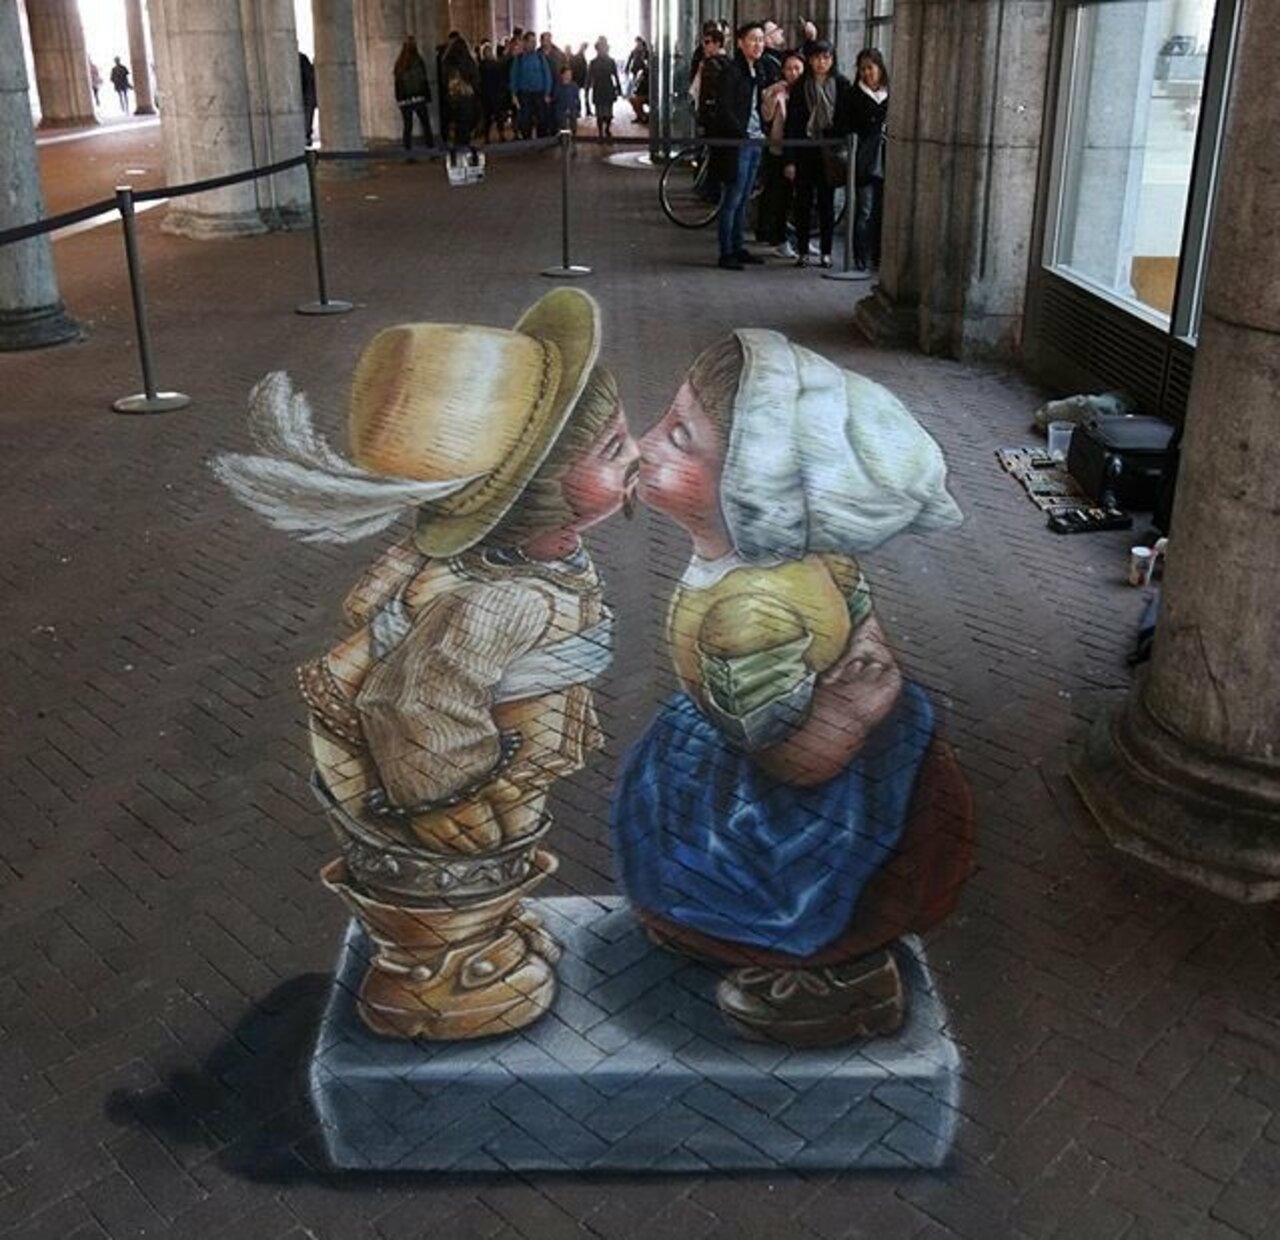 RT Lee_Bumstead Vermeer & Rembrandt meets Anamorphic 3D Street Art by Leon Keer 

#art #mural #graffiti #streetart https://t.co/17hjiBdiWs